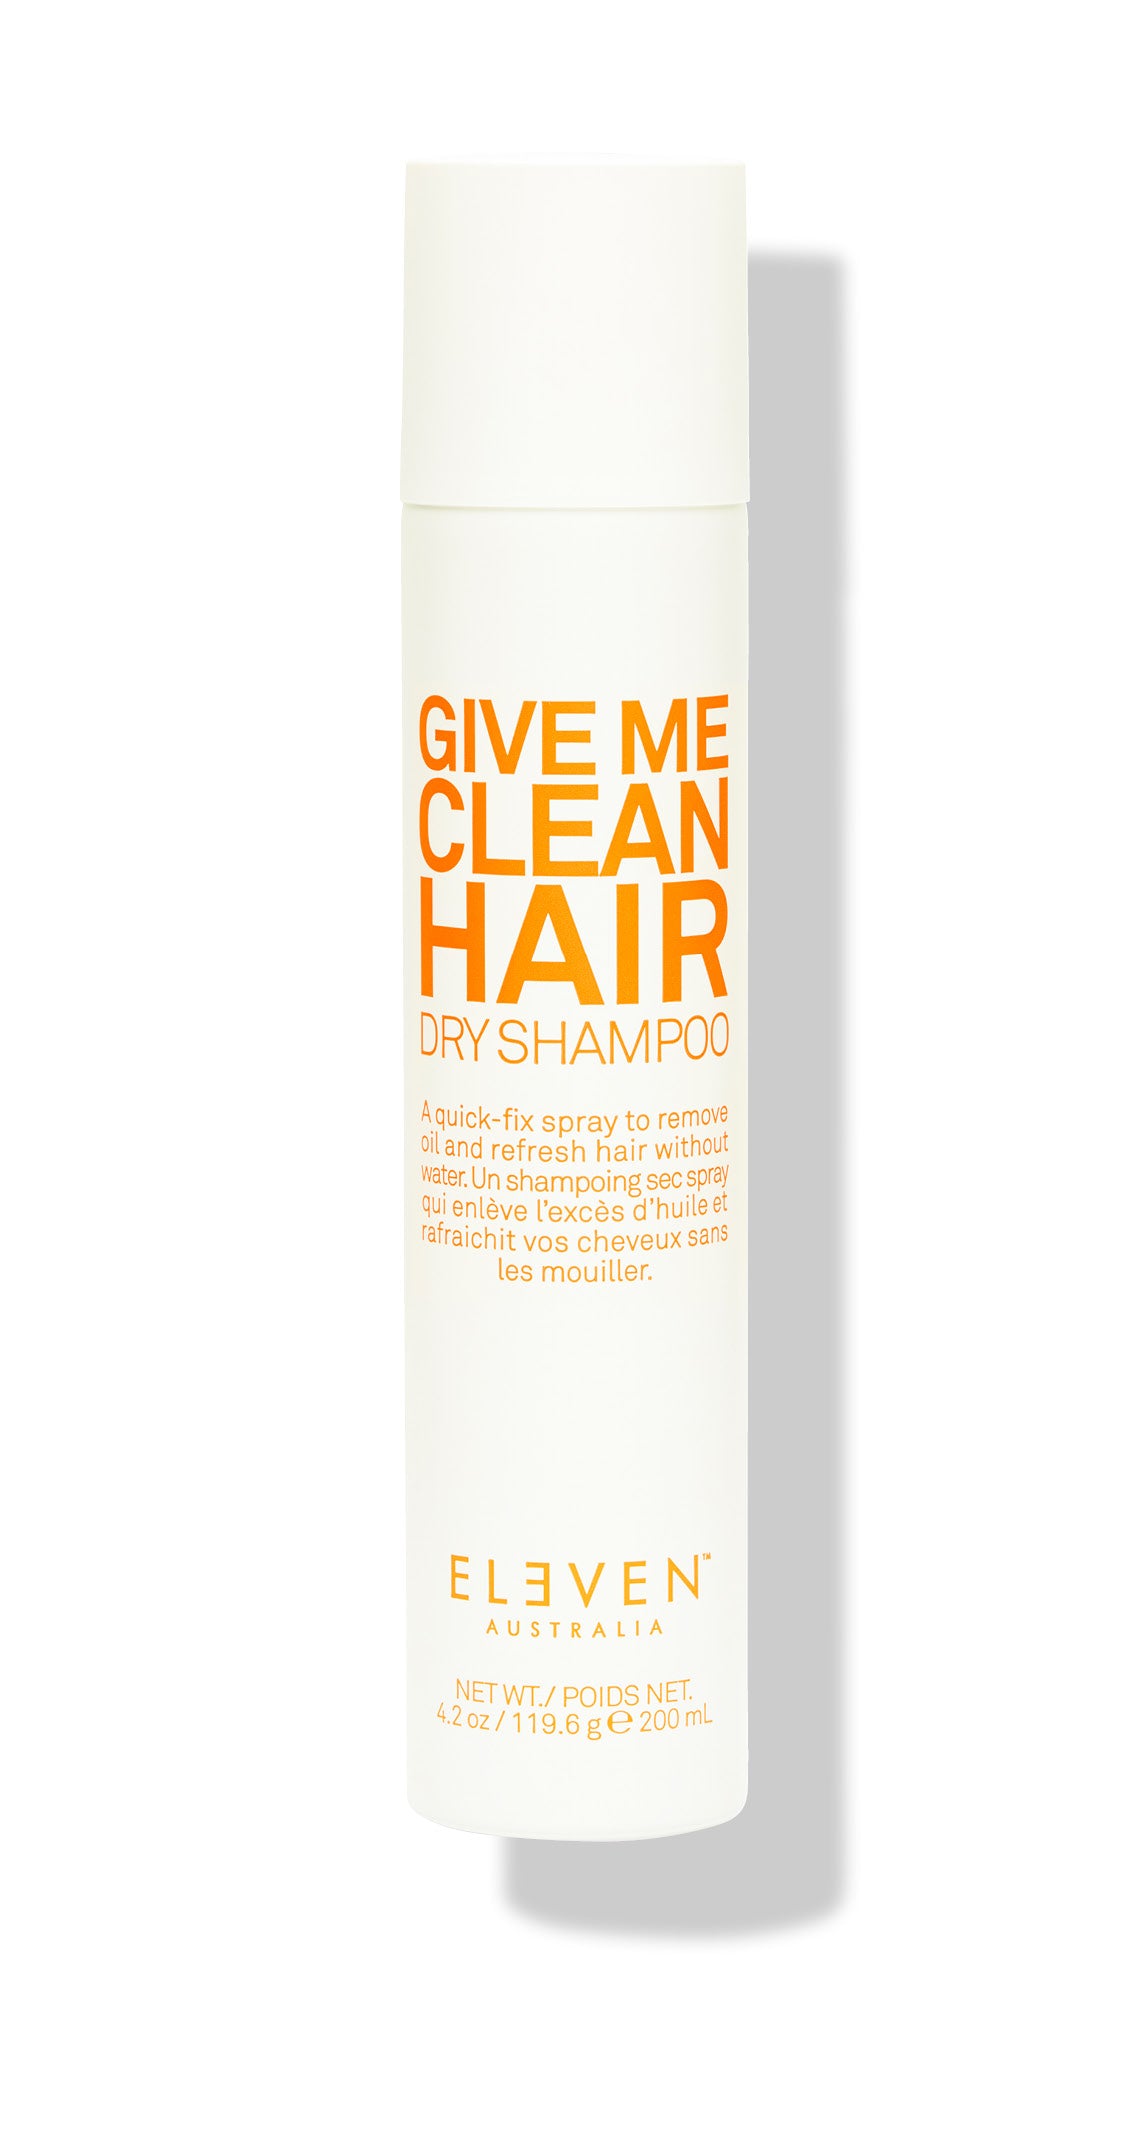 ELEVEN Australia Hair GIVE ME CLEAN HAIR DRY SHAMPOO ELEVEN Shampoo